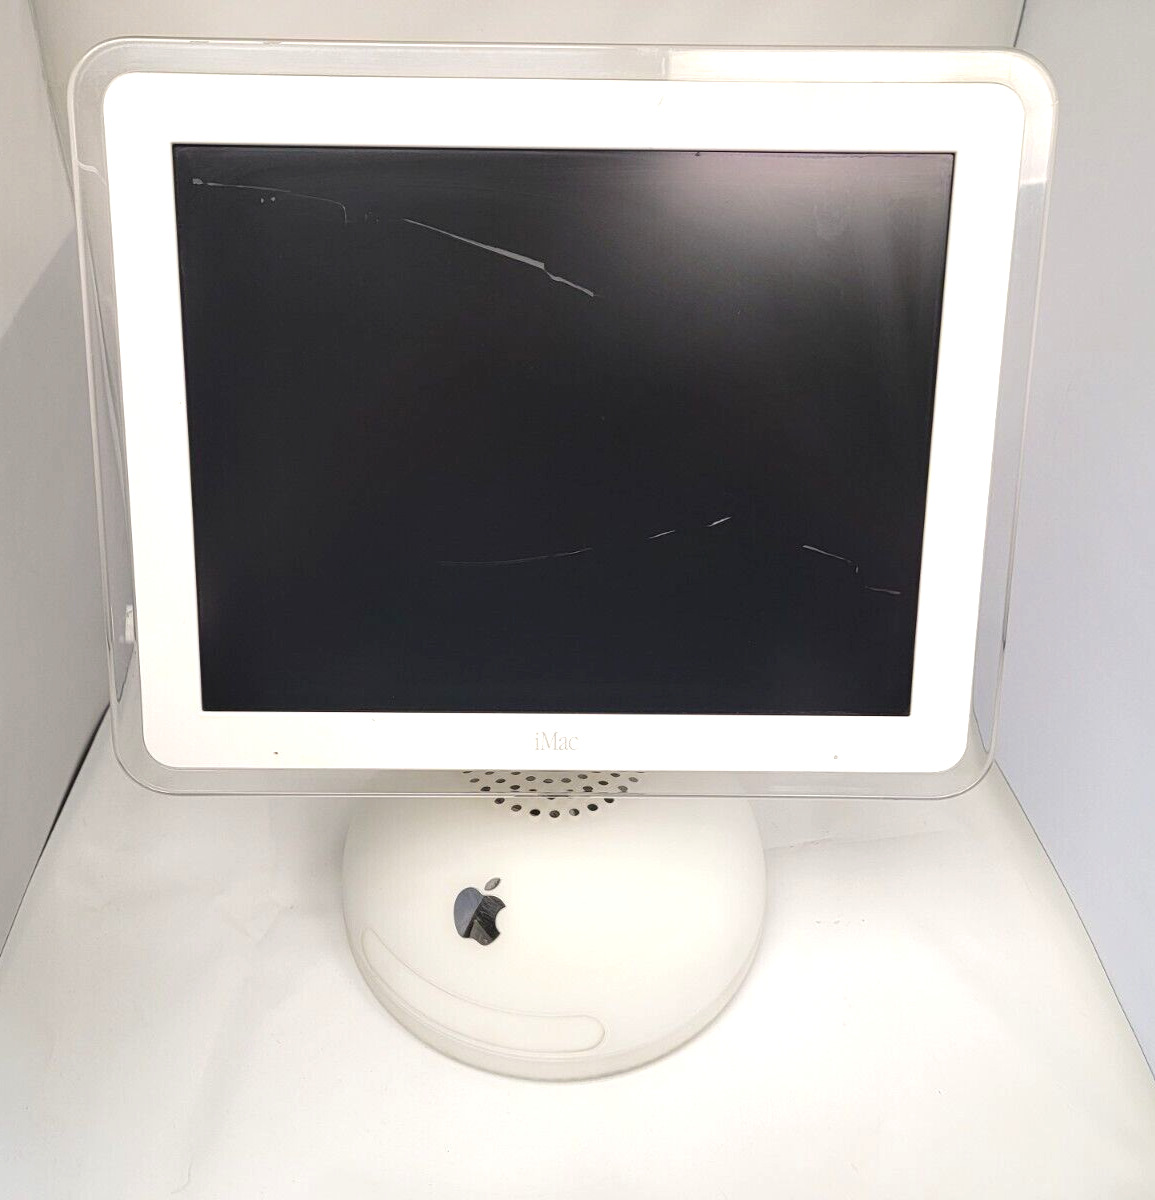 Apple iMac G4 15